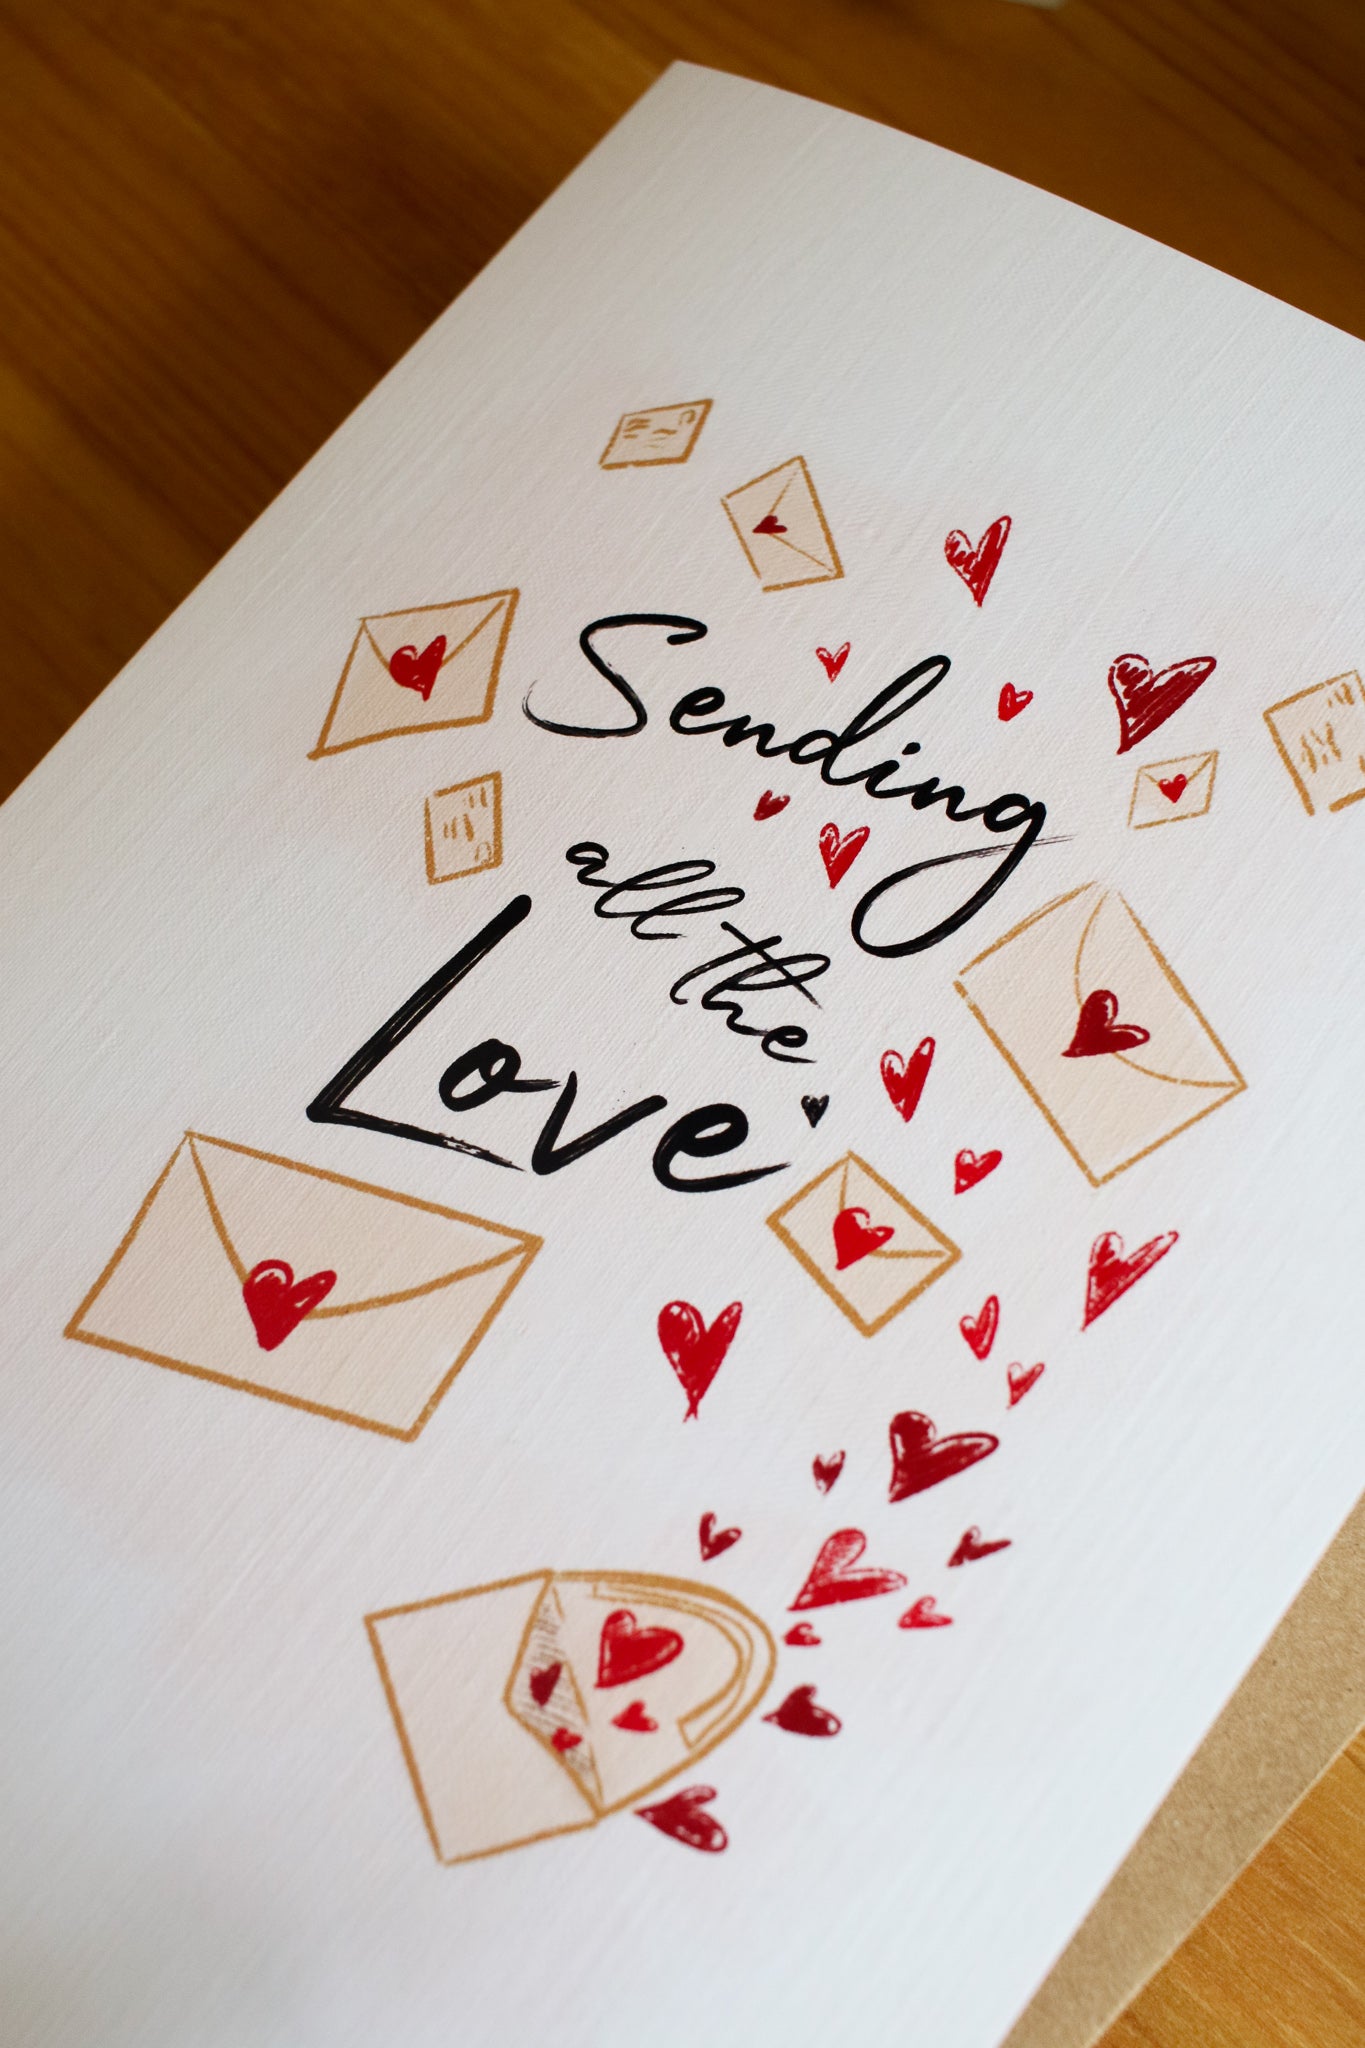 Sending Love - Greeting Card